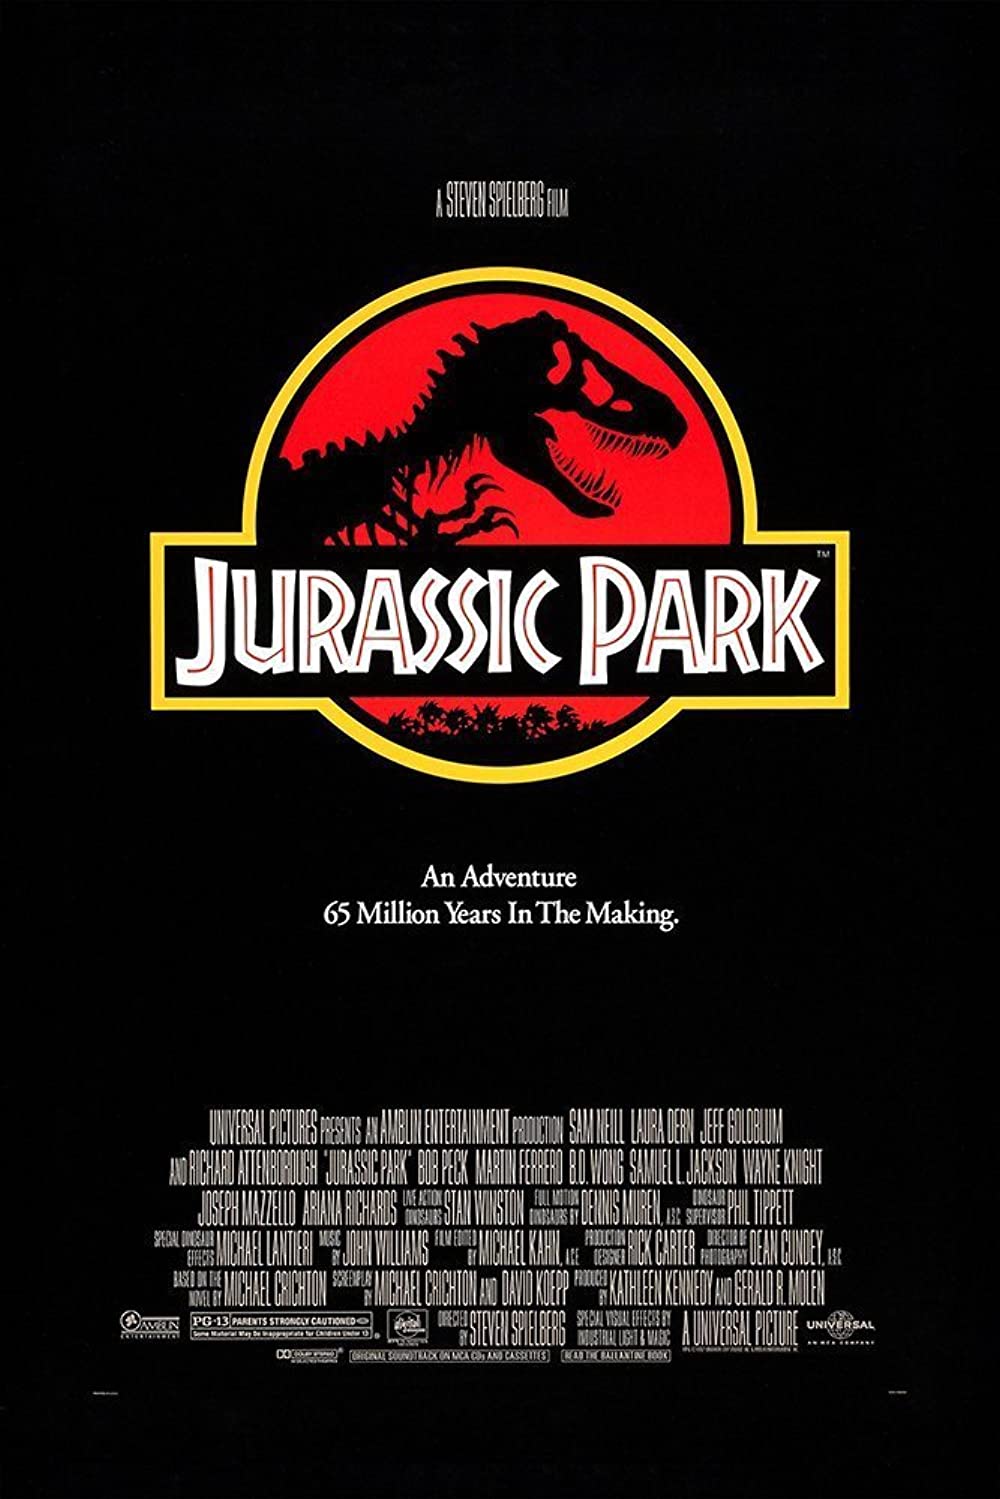 Filmbeschreibung zu Jurassic Park